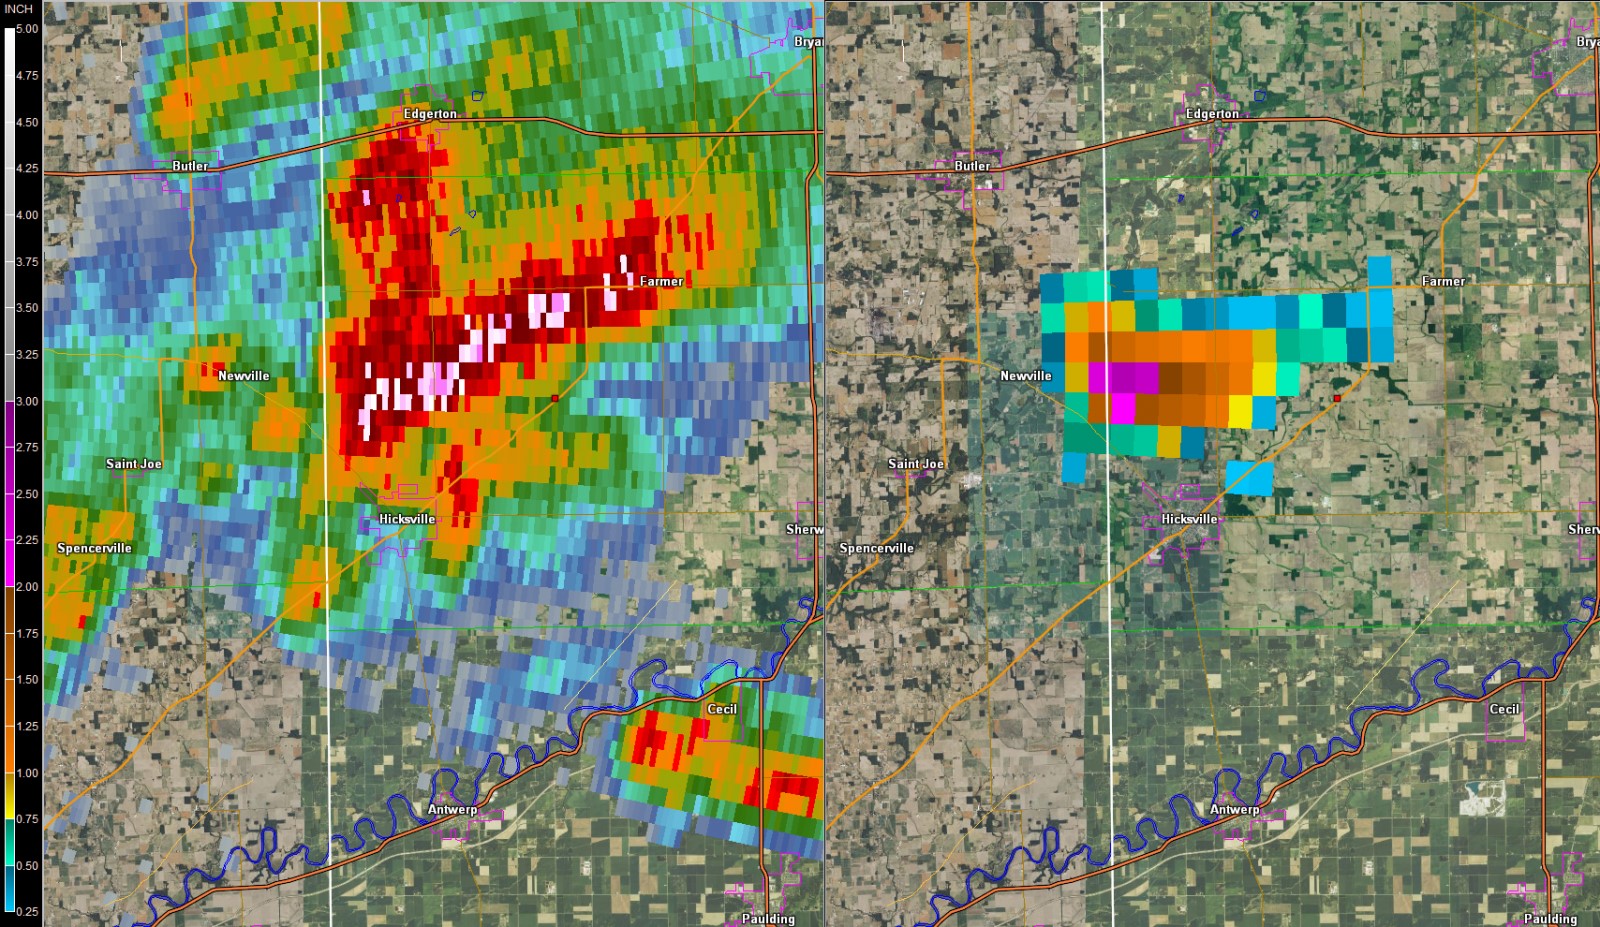 247 pm EDT 0.5 degree radar reflectivity (left) and maximum estimate hail size (right)